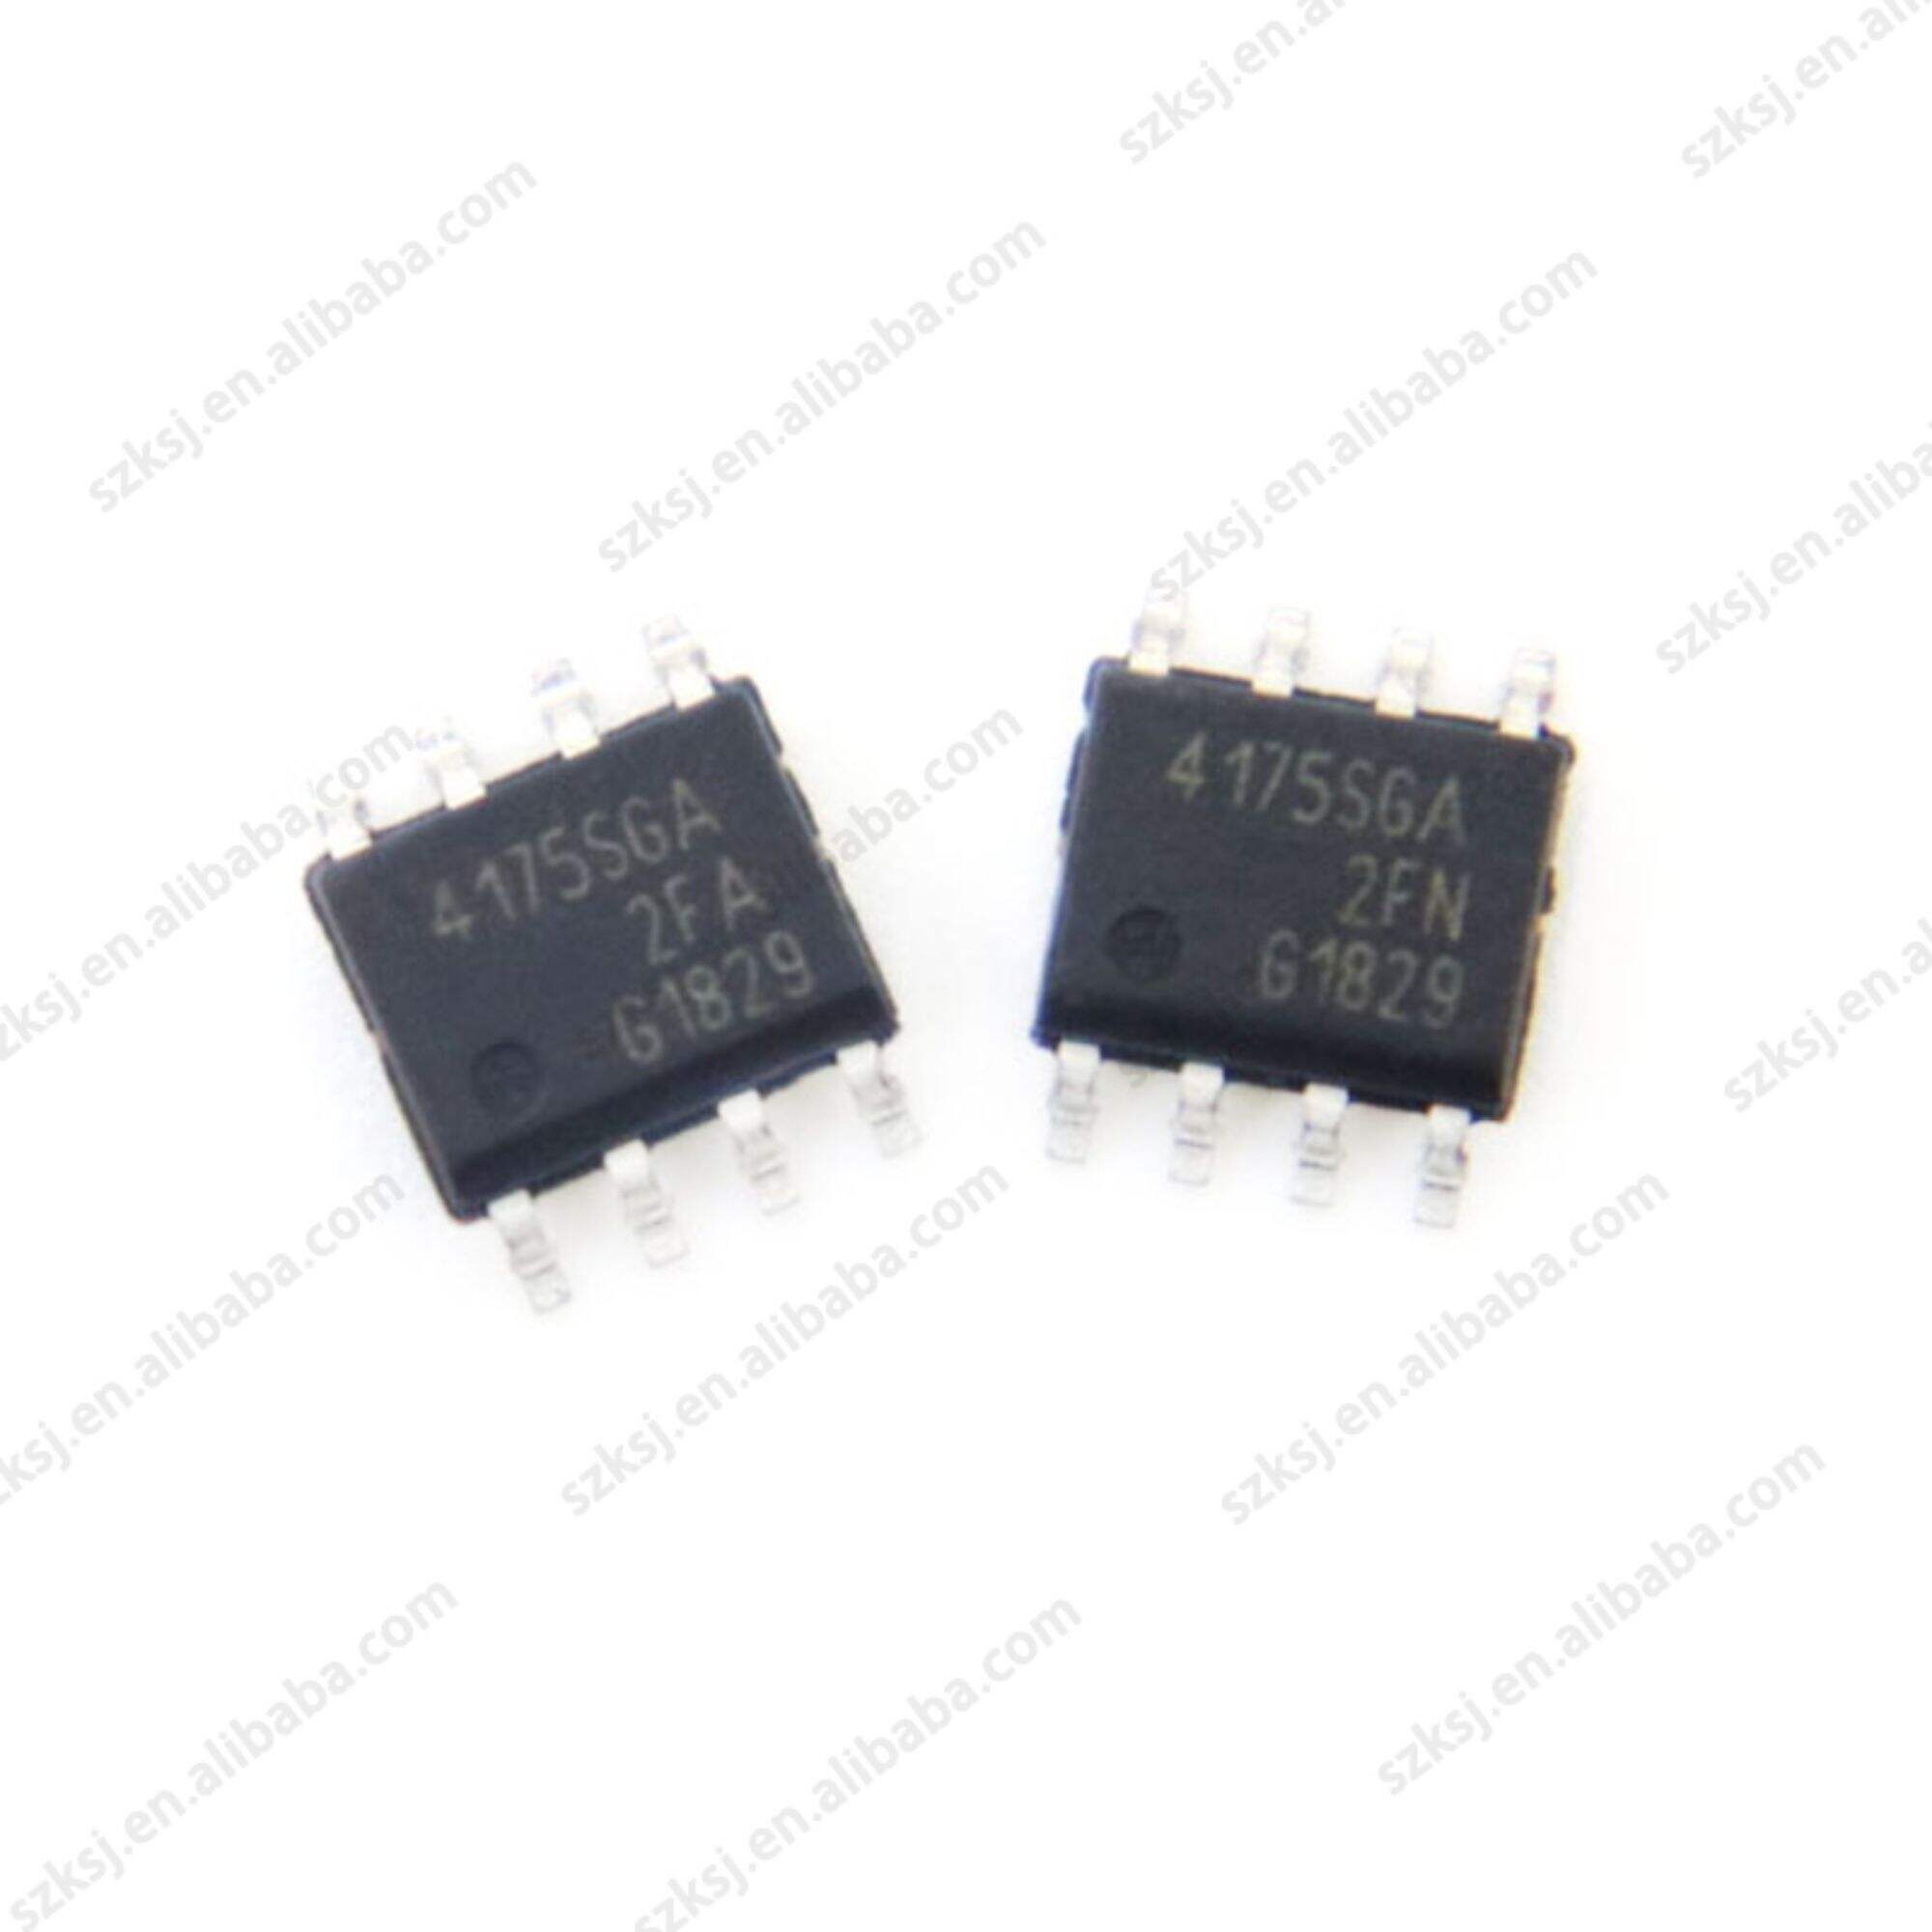 BTS4175SGAXUMA1 BTS4175SGA new original spot power switch chip 8-SOIC integrated circuit IC